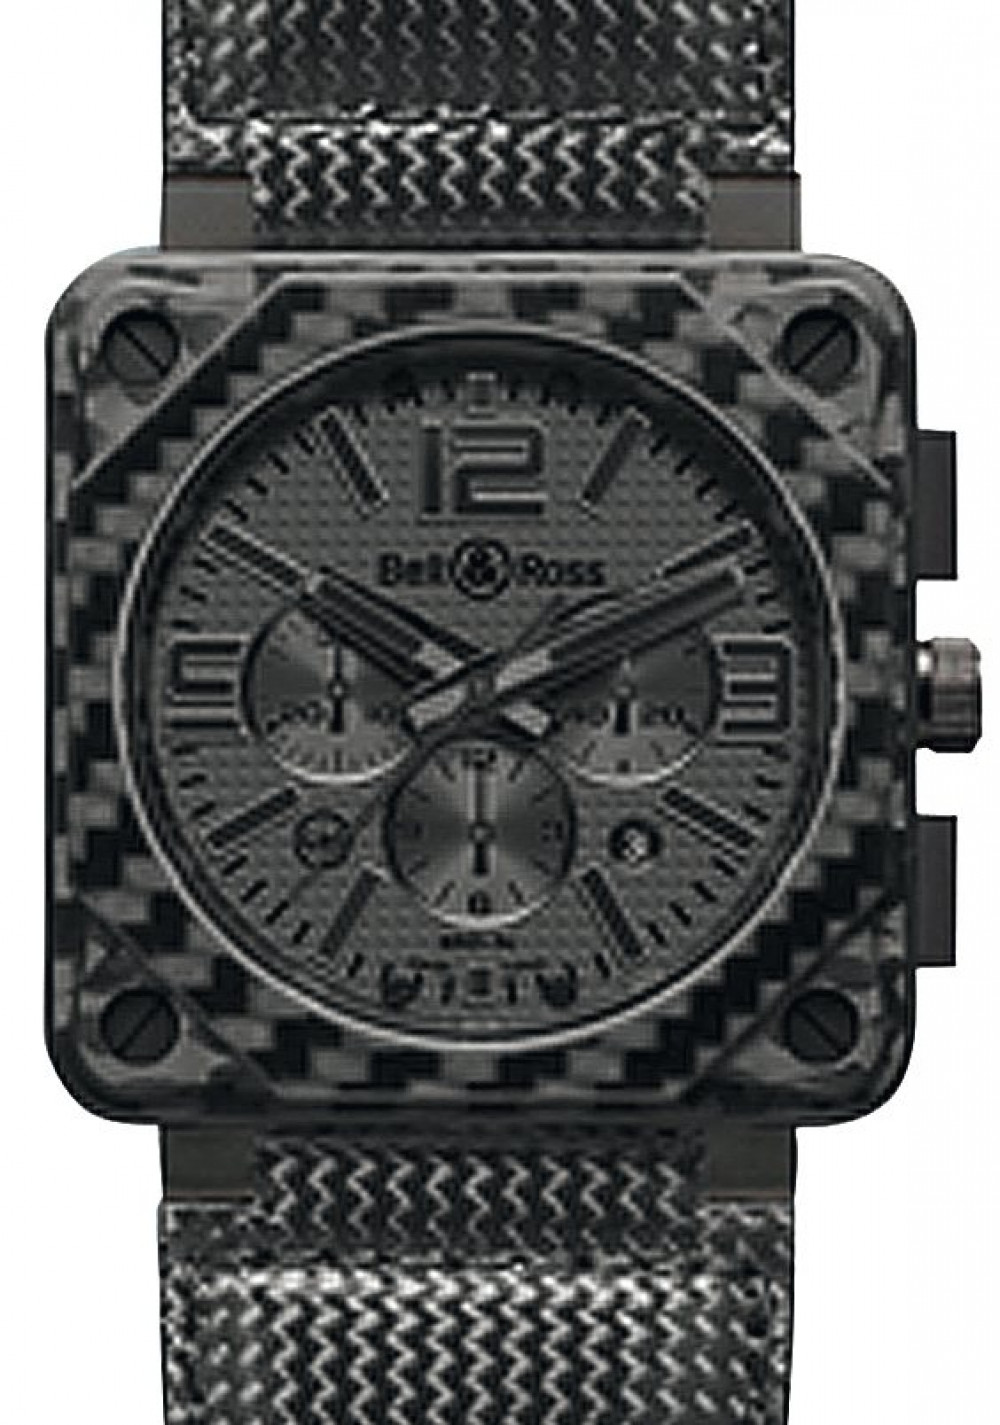 Zegarek firmy Bell & Ross, model BR 01-94 Carbon Fiber Phantom